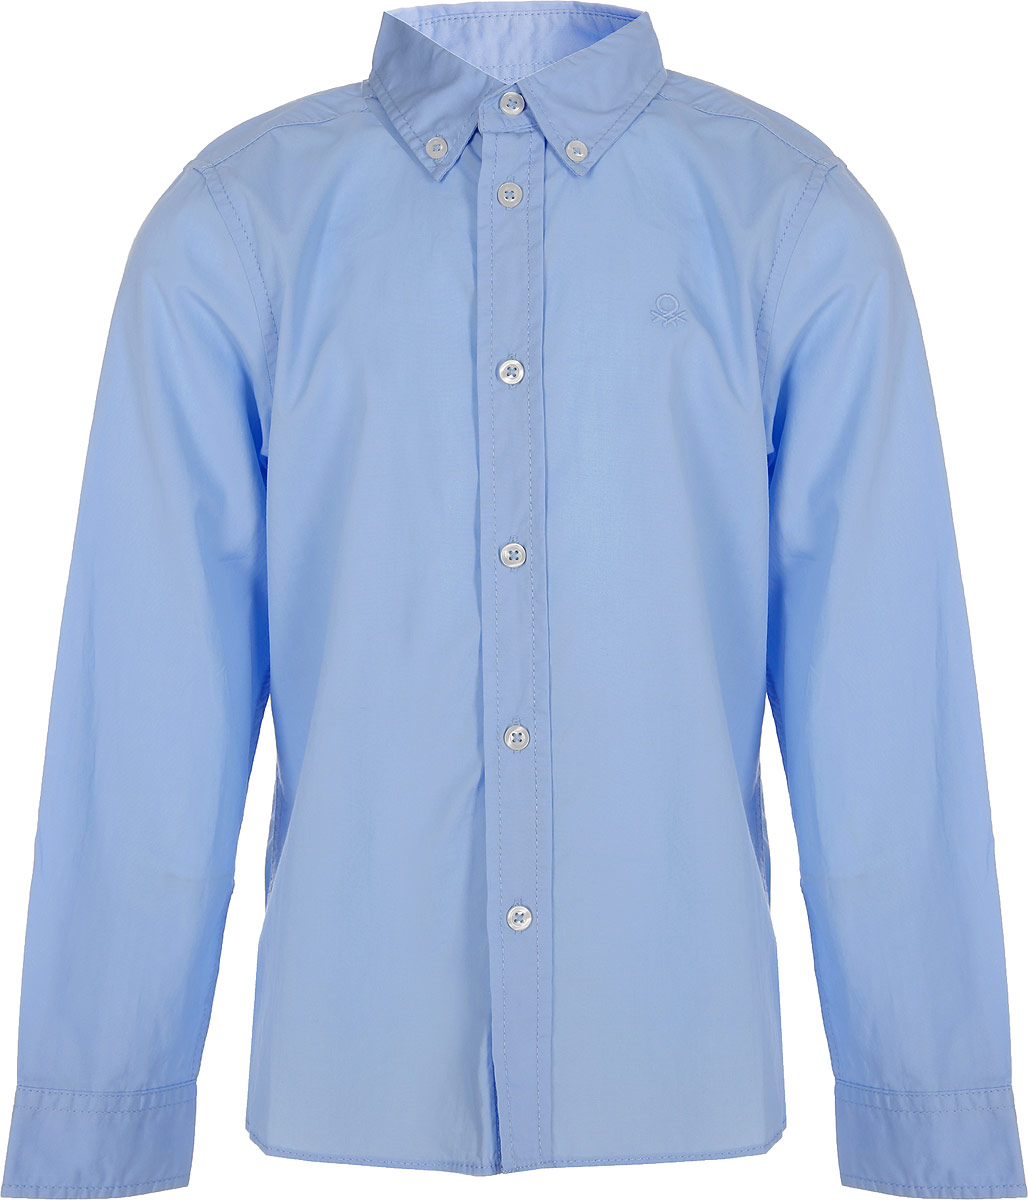 Рубашка для мальчика United Colors of Benetton, цвет: темно-голубой. 5EW75Q600_20B. Размер 120